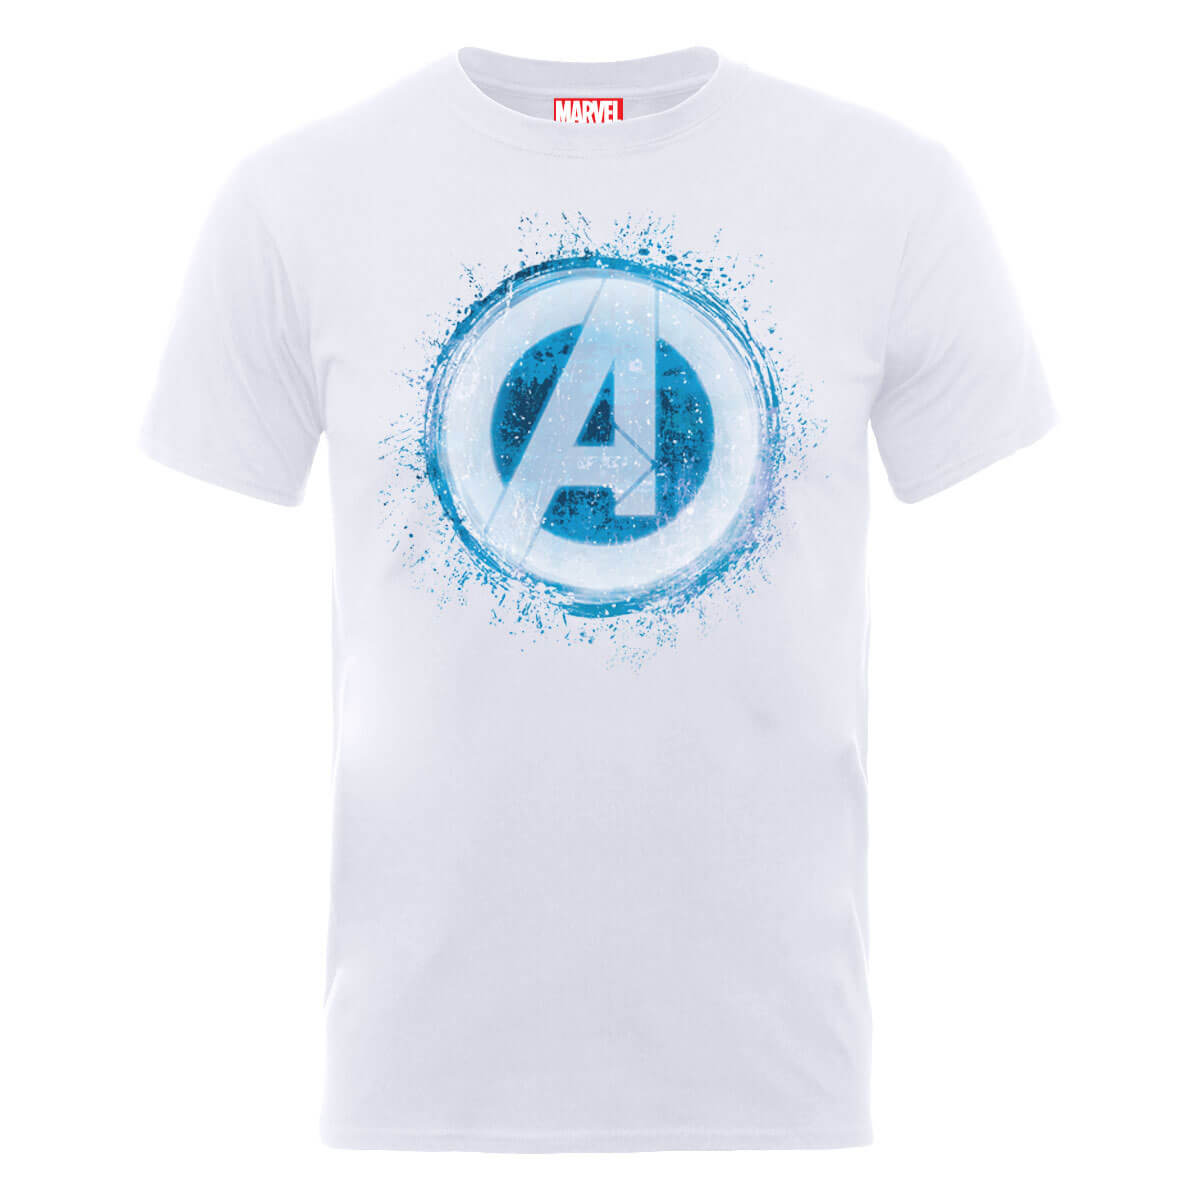 Marvel Avengers Assemble Glowing Logo T-Shirt – Weiß – M